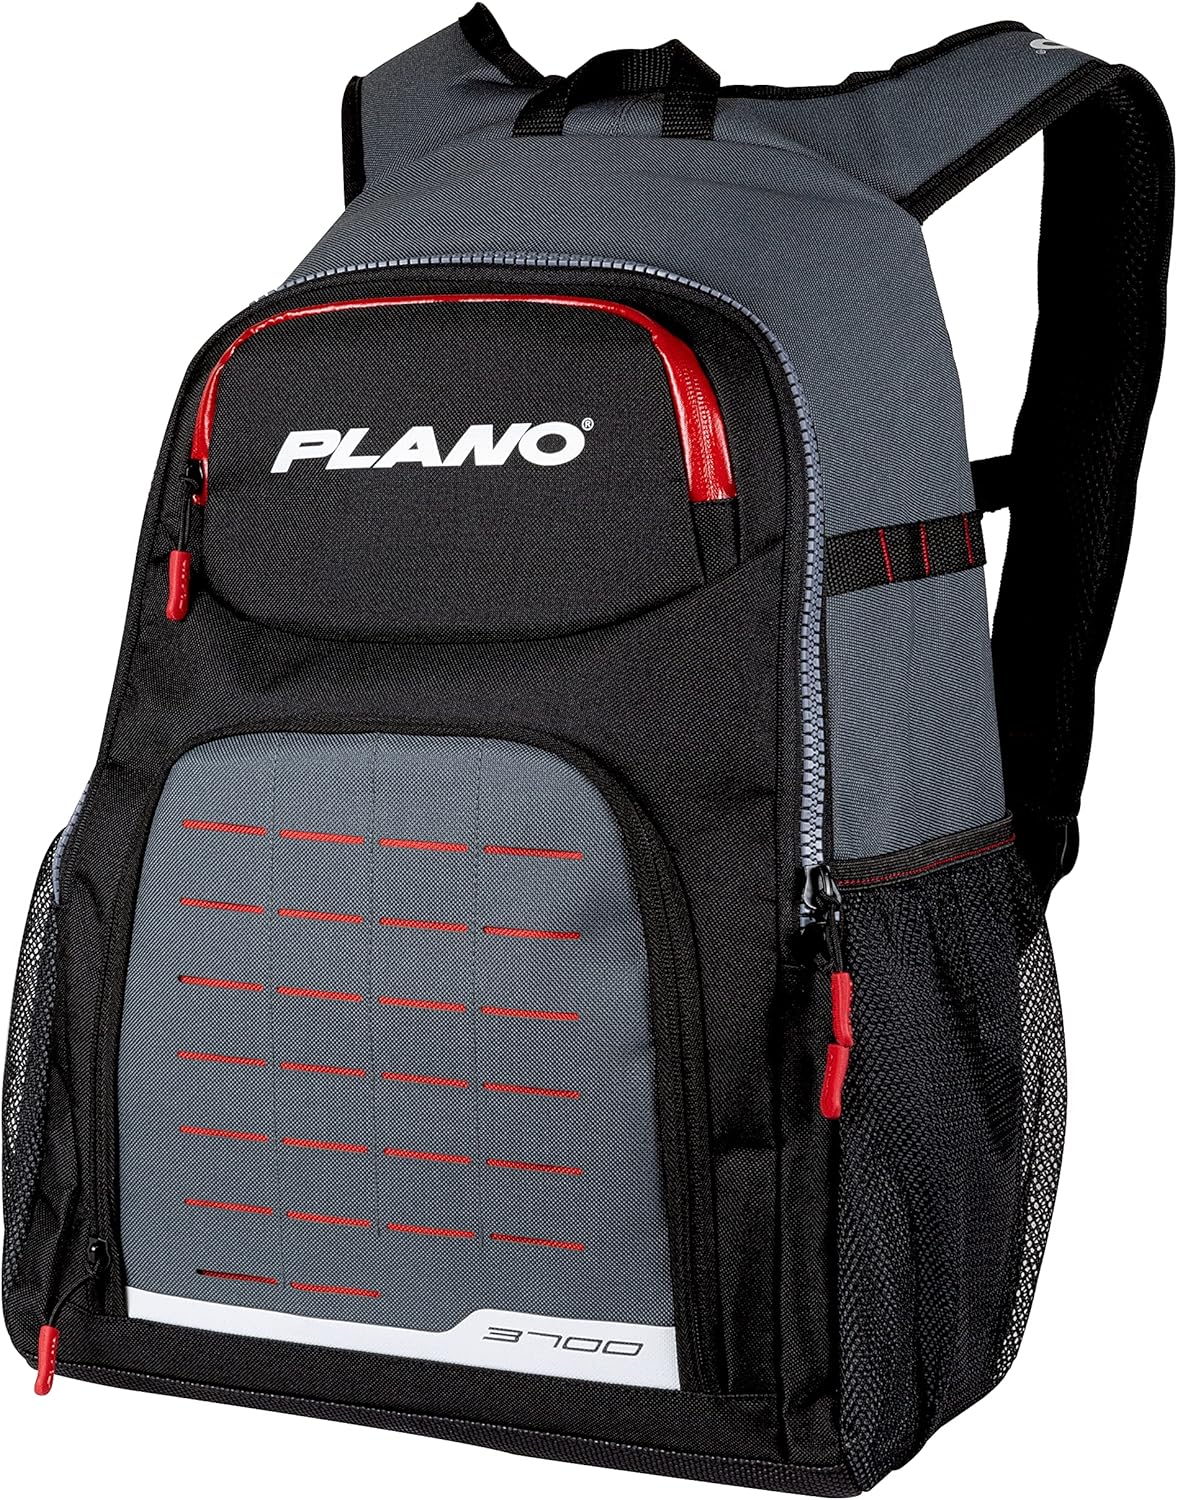 Plano Weekend Series 3700 Backpack Tackle Backpack Holds